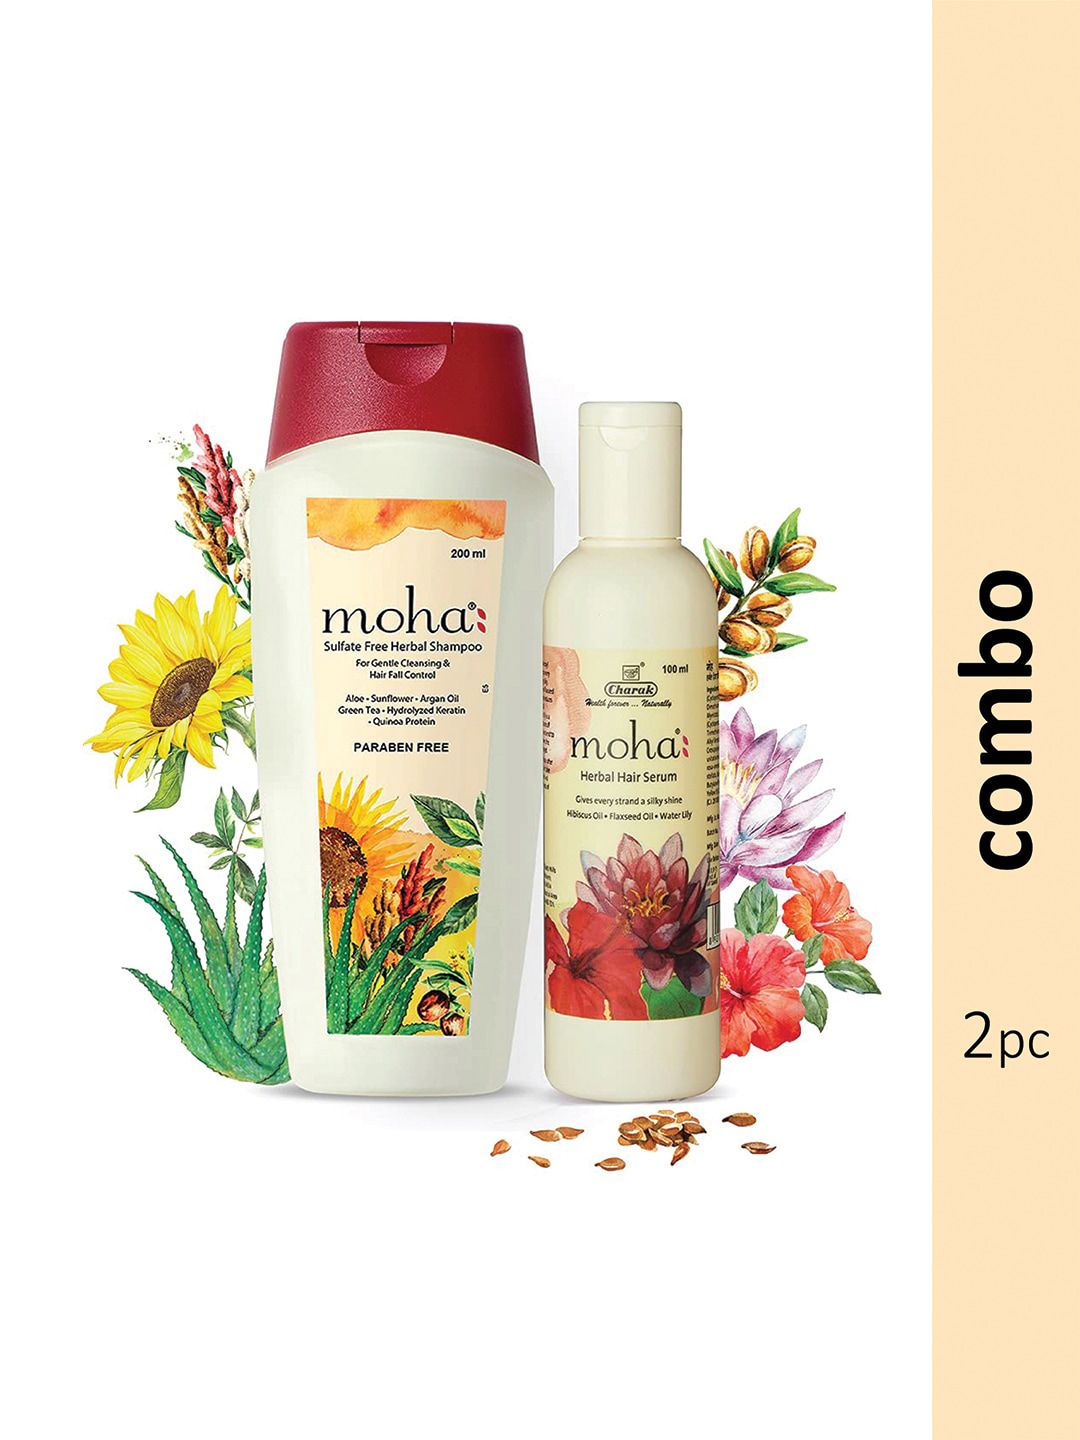 moha Sulfate-Free Sunflower Oil Shampoo 200 ml & Herbal Hair Serum 100 ml Price in India